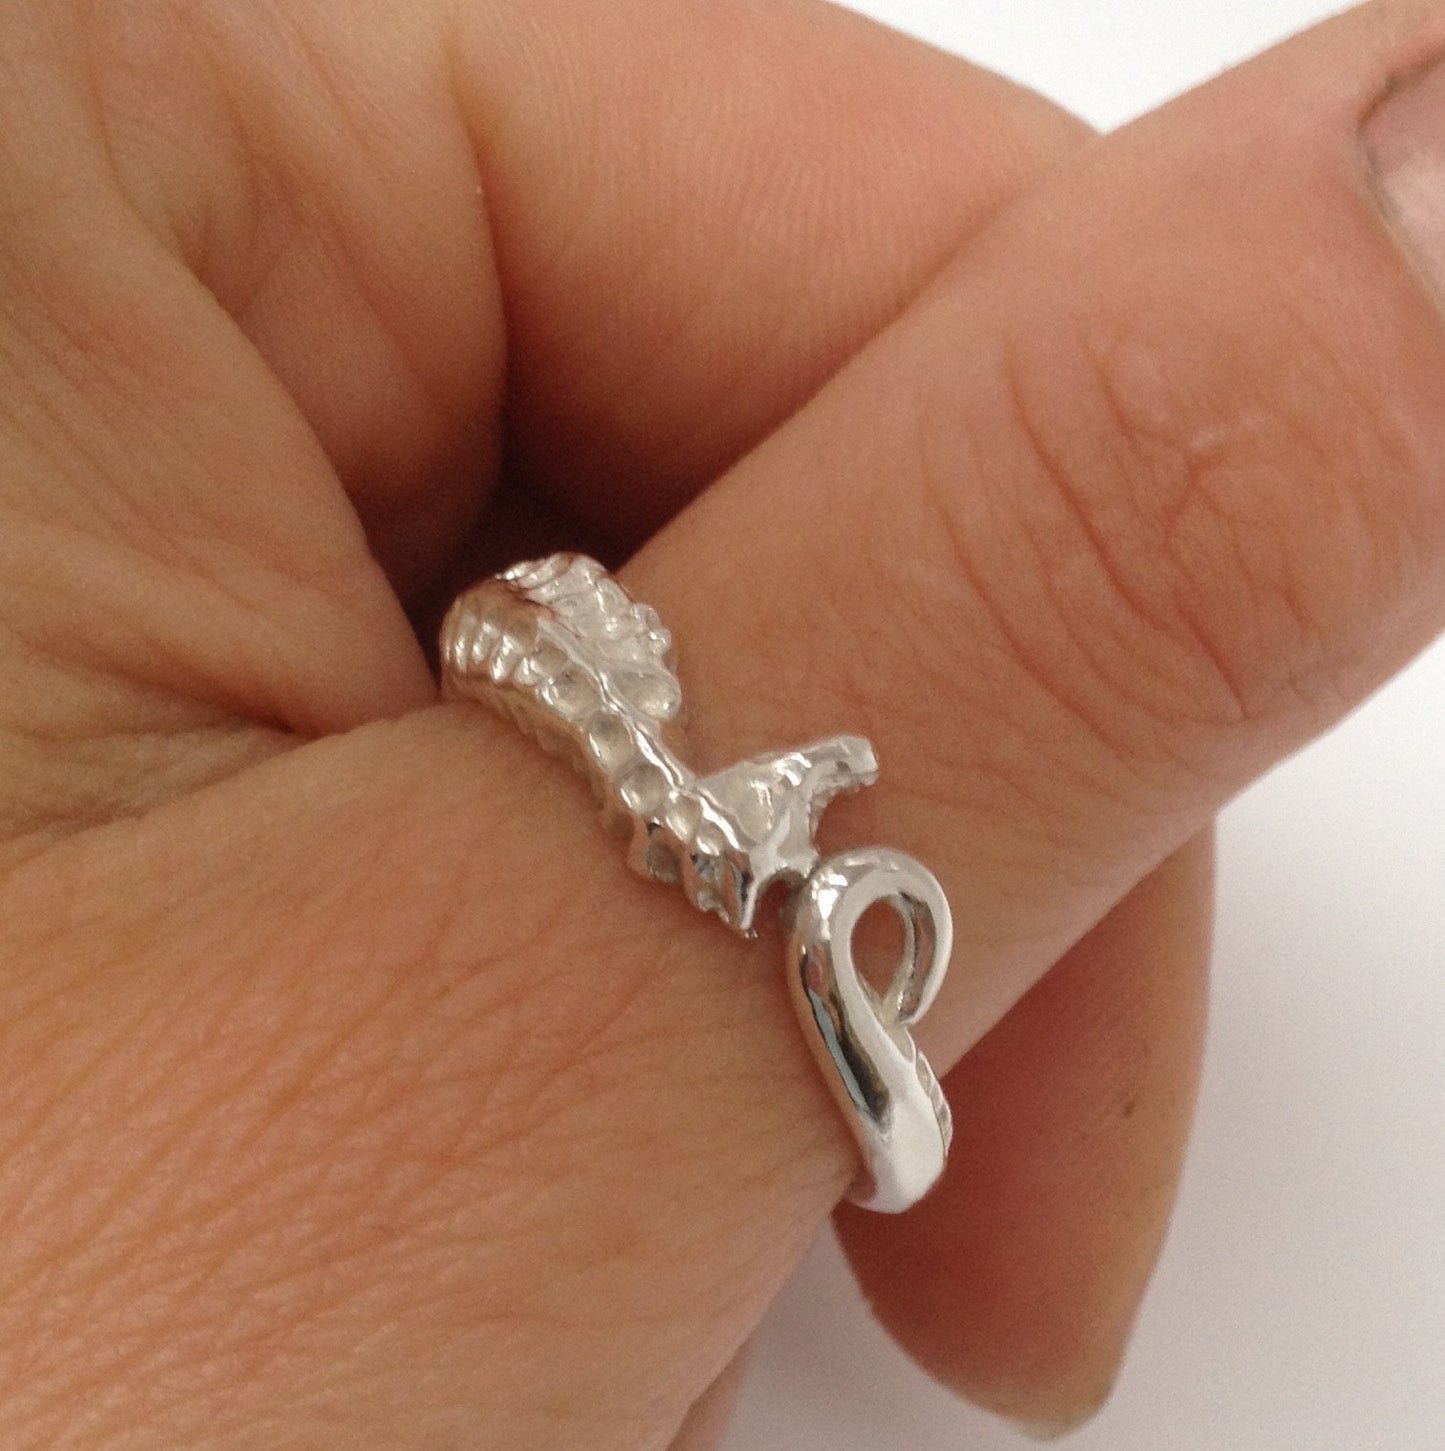 Silver seahorse ring